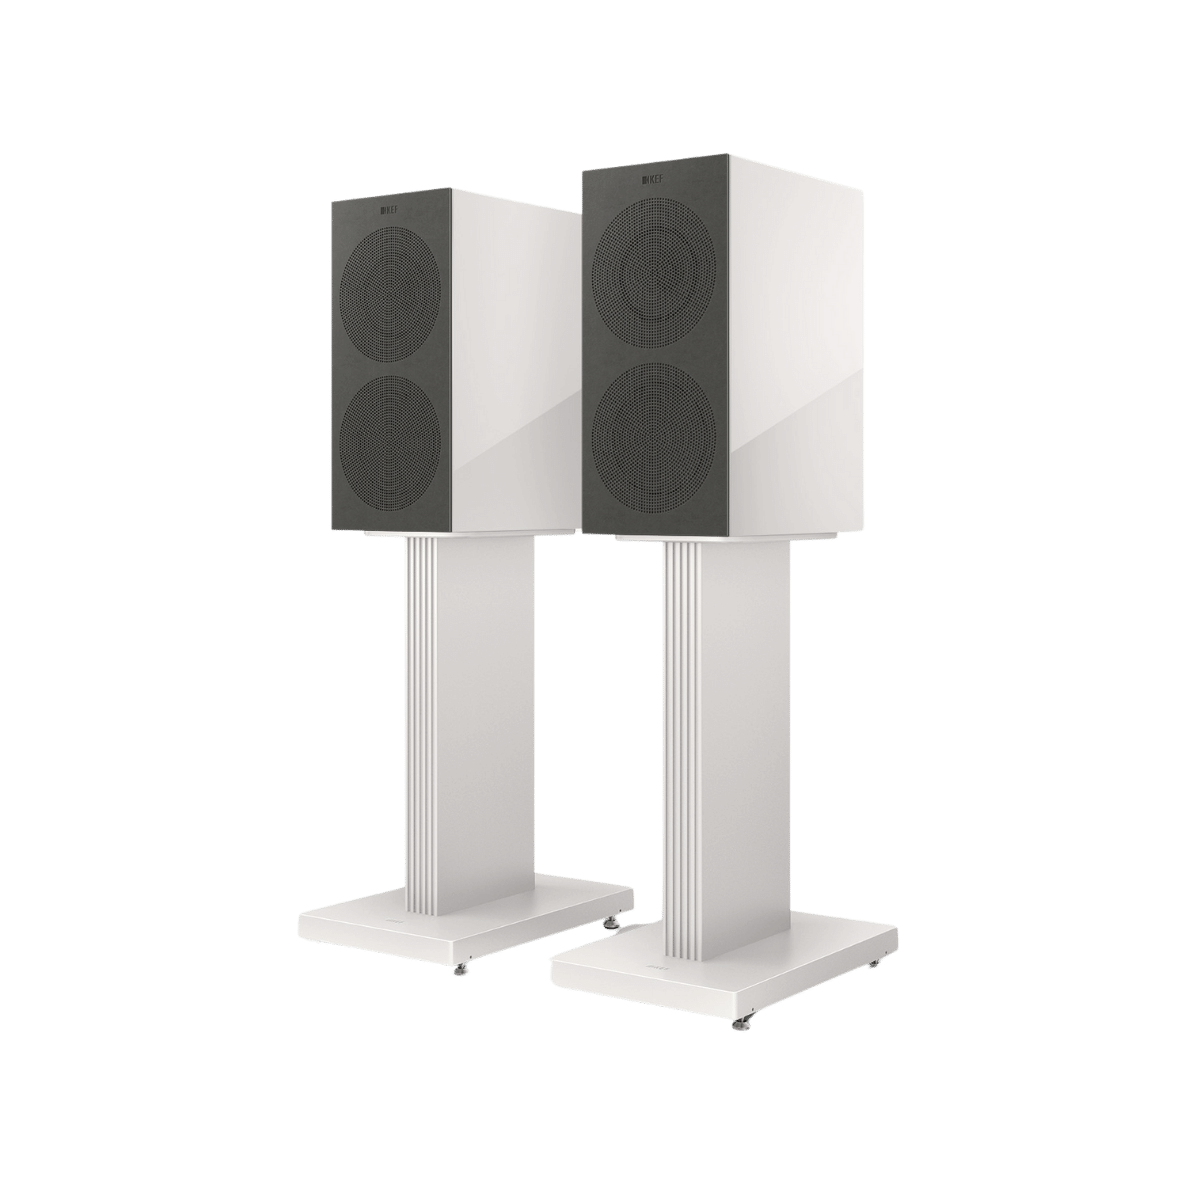 KEF R3 Meta 3-way Bookshelf Speakers in white with grilles on